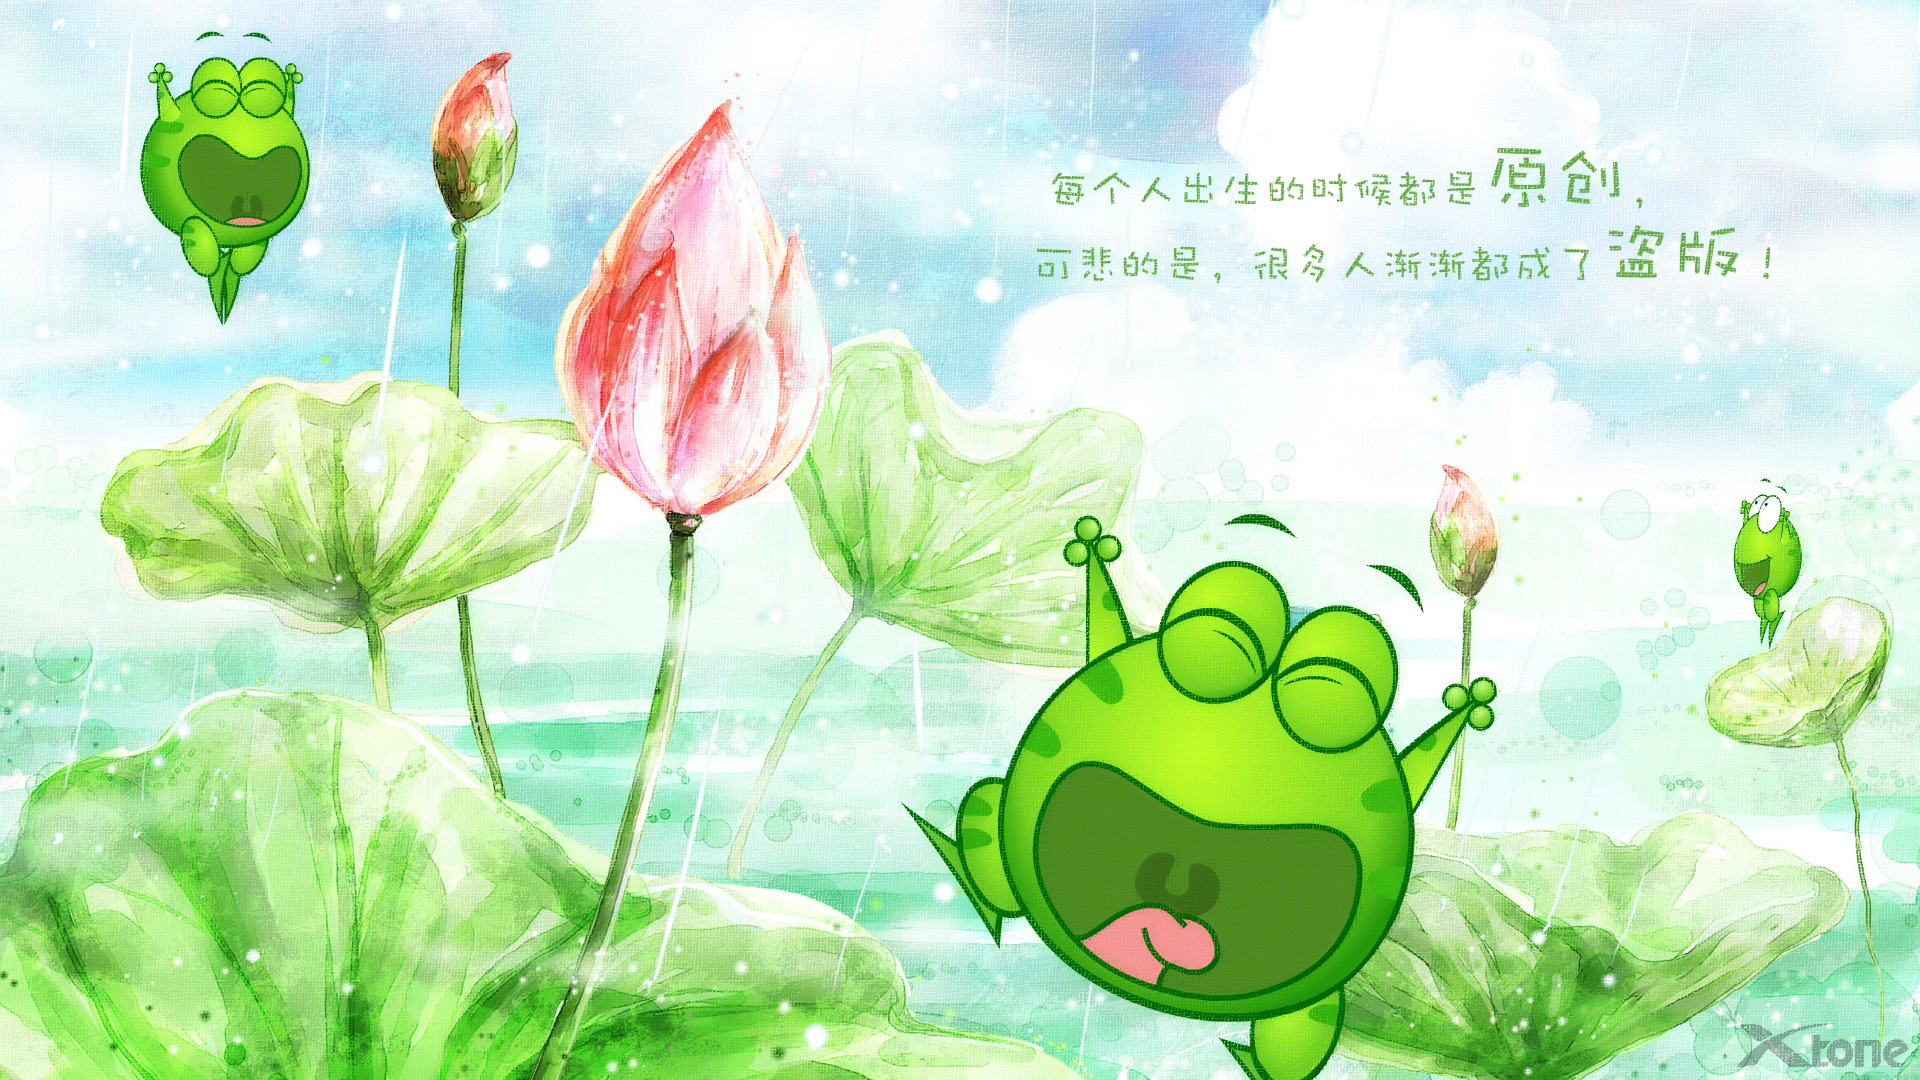 XTone翔通动漫集团-绿豆蛙精美壁纸(一)|插画|